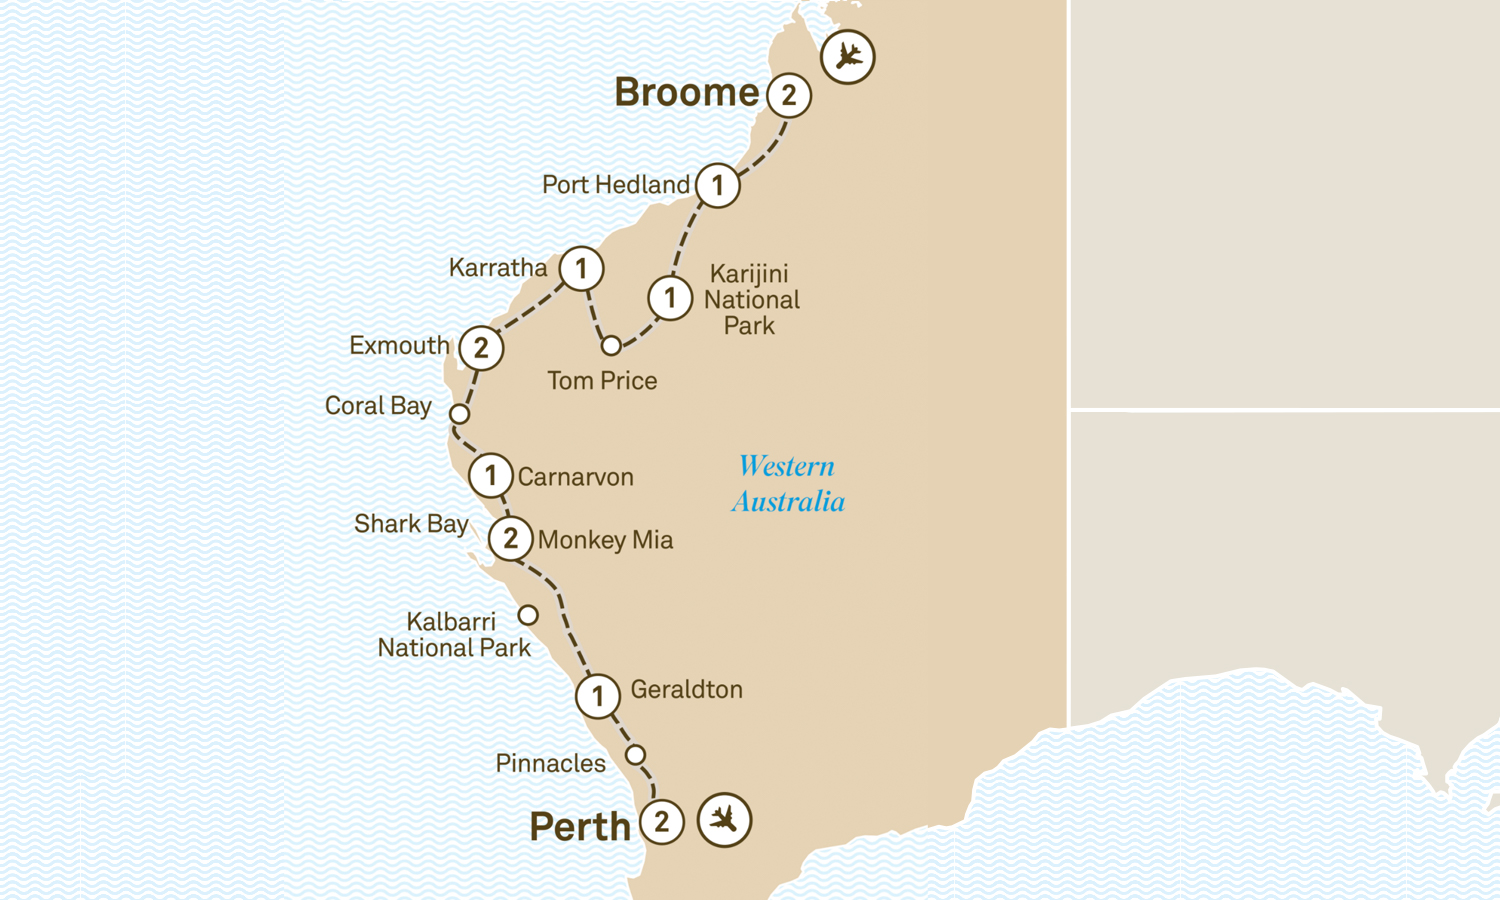 Scenic 14-day Broome to Perth tour